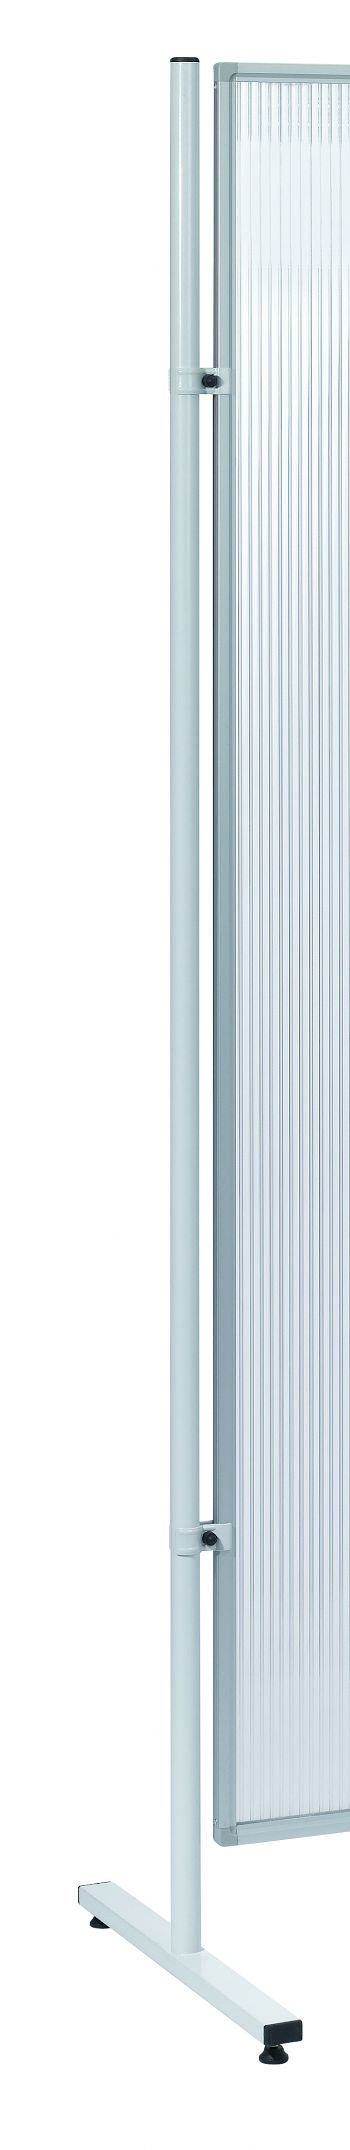 Stellwand-Säule Aluminium hellgrau H: 190 cm